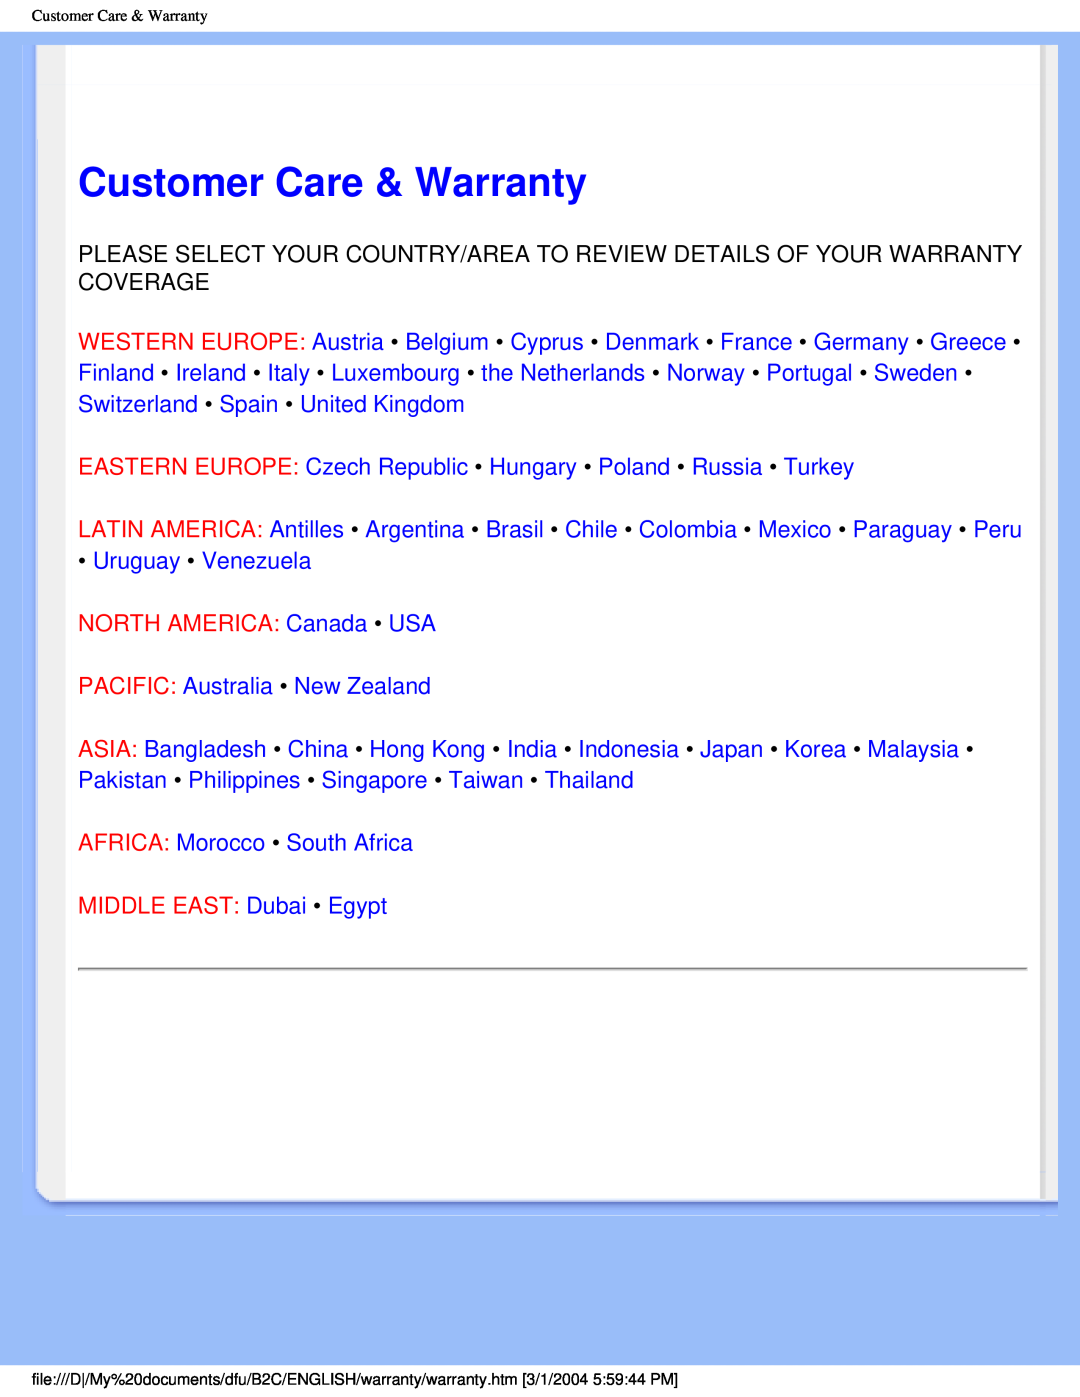 Philips 170N4 user manual Customer Care & Warranty, NORTH AMERICA Canada USA, MIDDLE EAST Dubai Egypt 